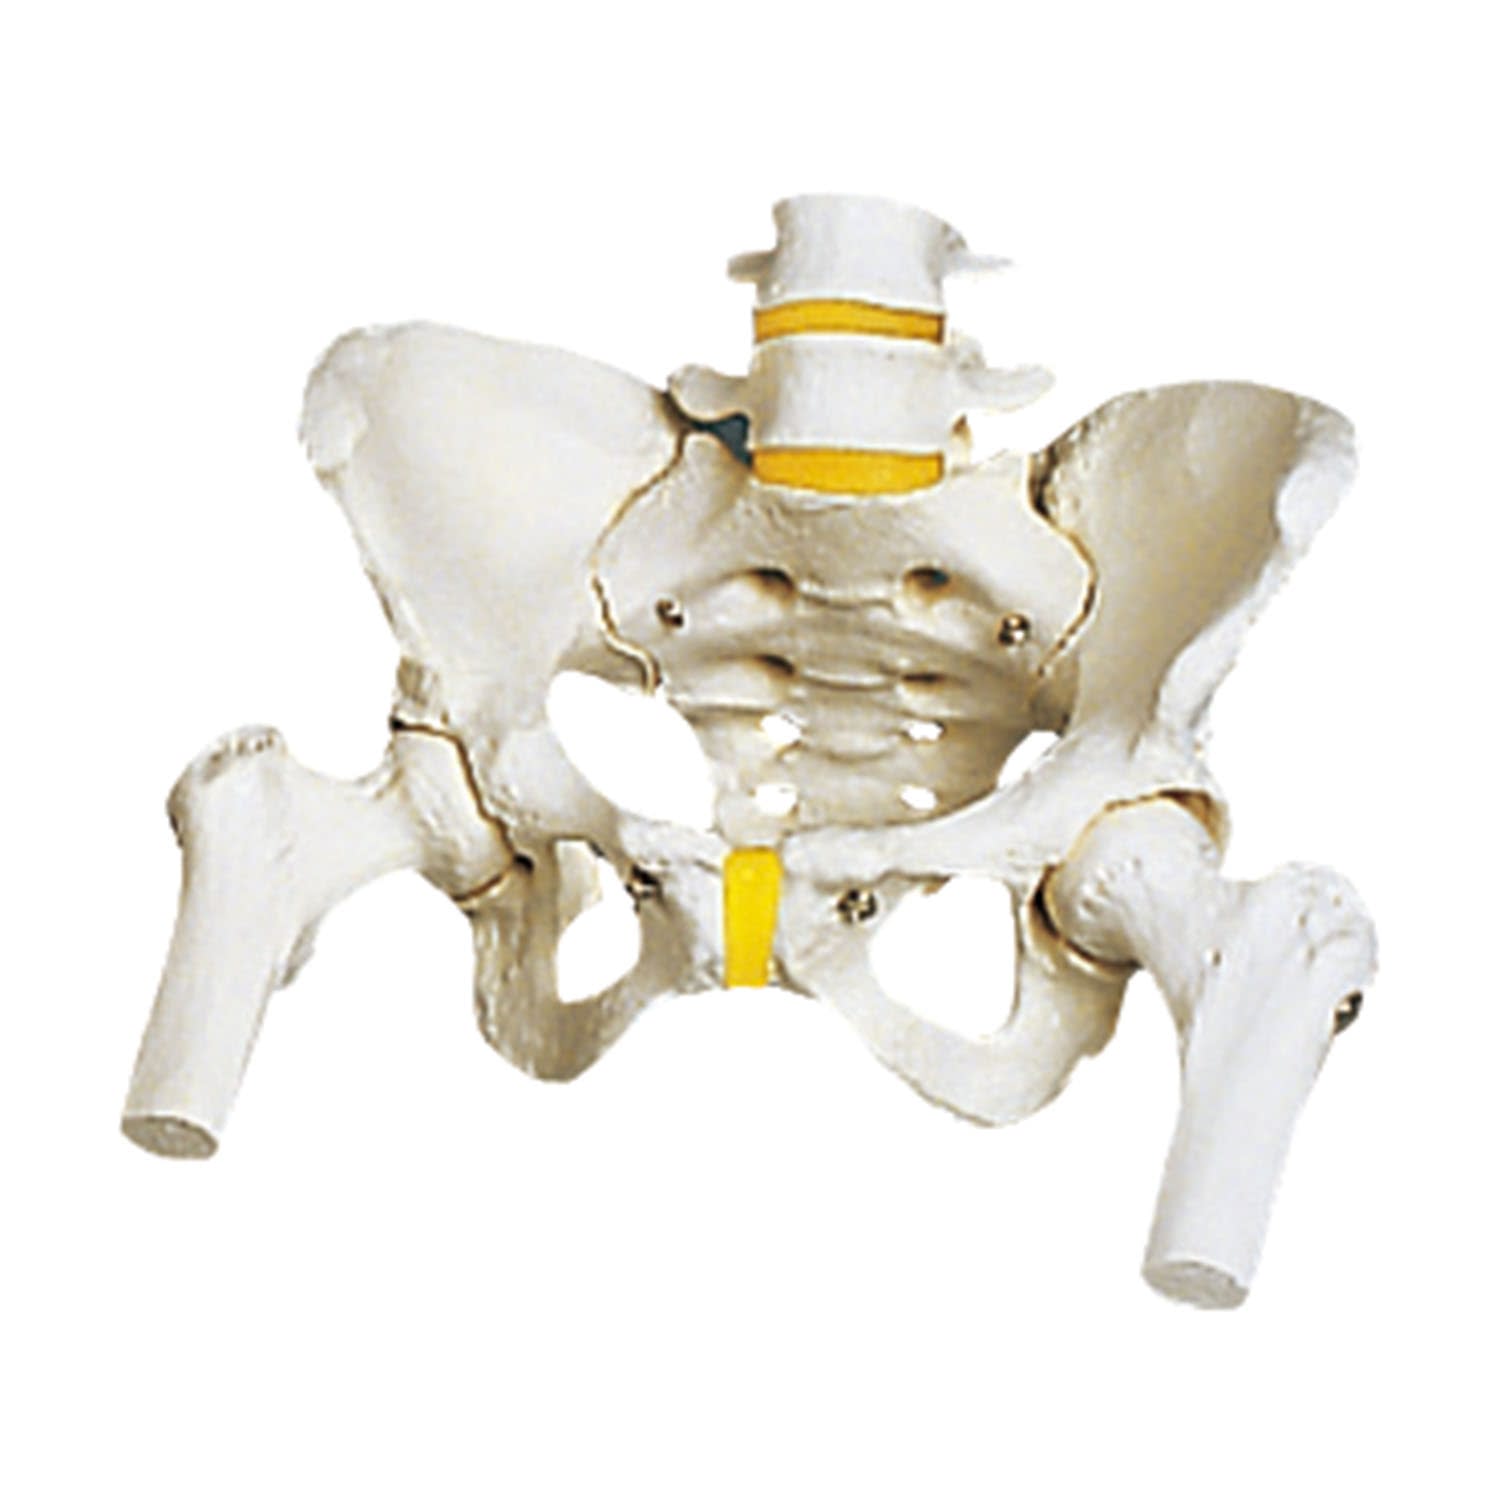 (11-2195-01)骨盤モデル（女性・大腿骨付） A62(30X30X20CM) ｺﾂﾊﾞﾝﾓﾃﾞﾙ(京都科学)【1台単位】【2019年カタログ商品】